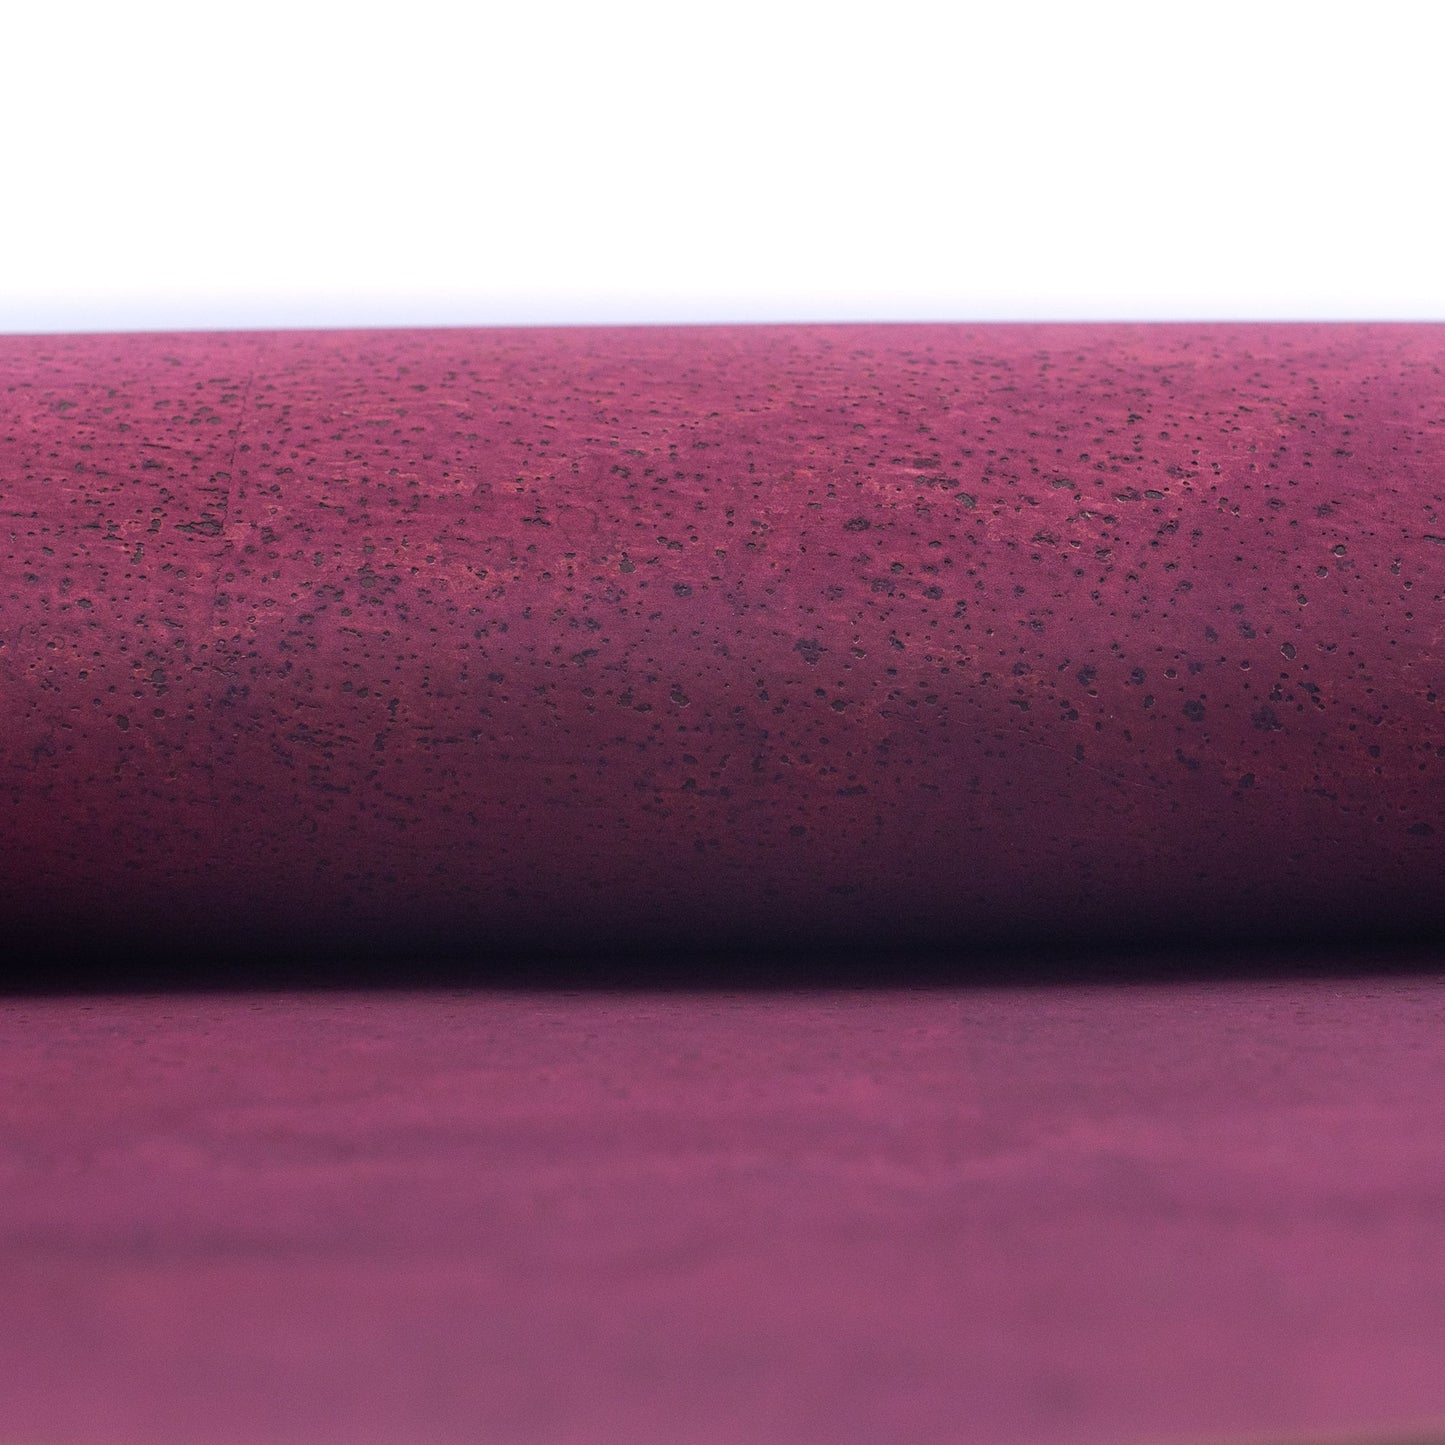 Cheey Red cork Textile Sheet Portuguese Cork Fabric COF-440